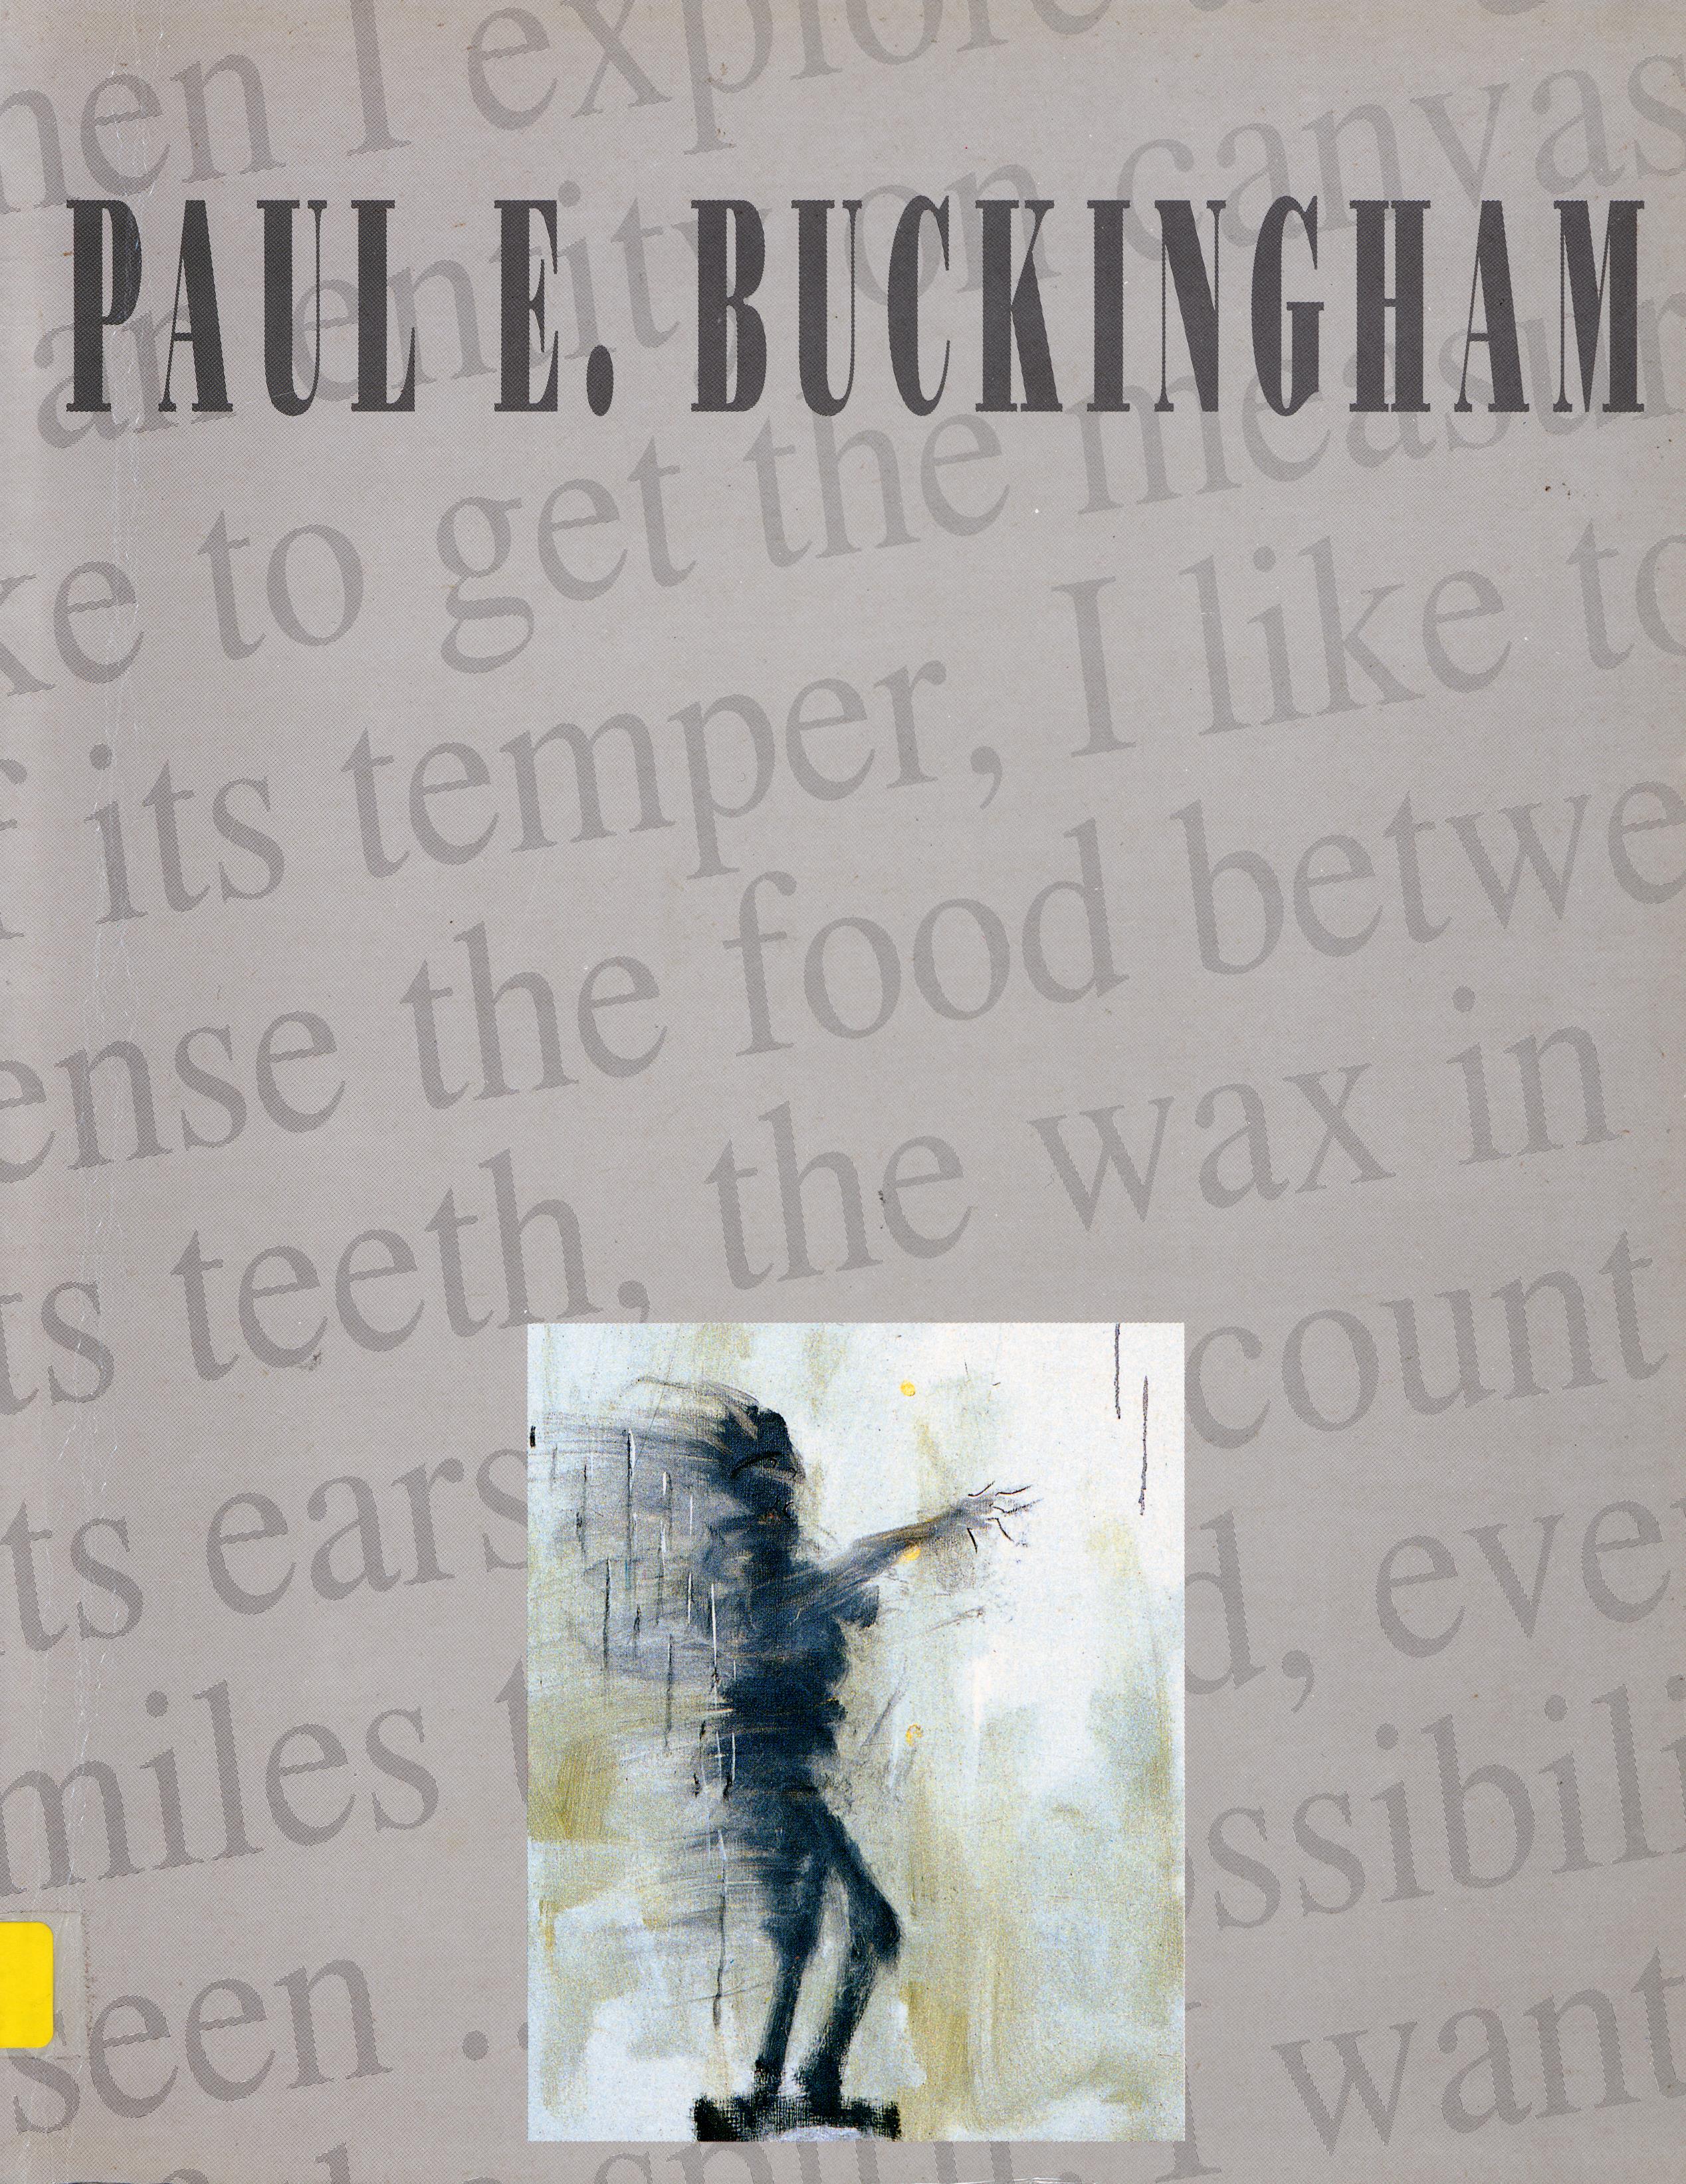 Paul E. Buckingham